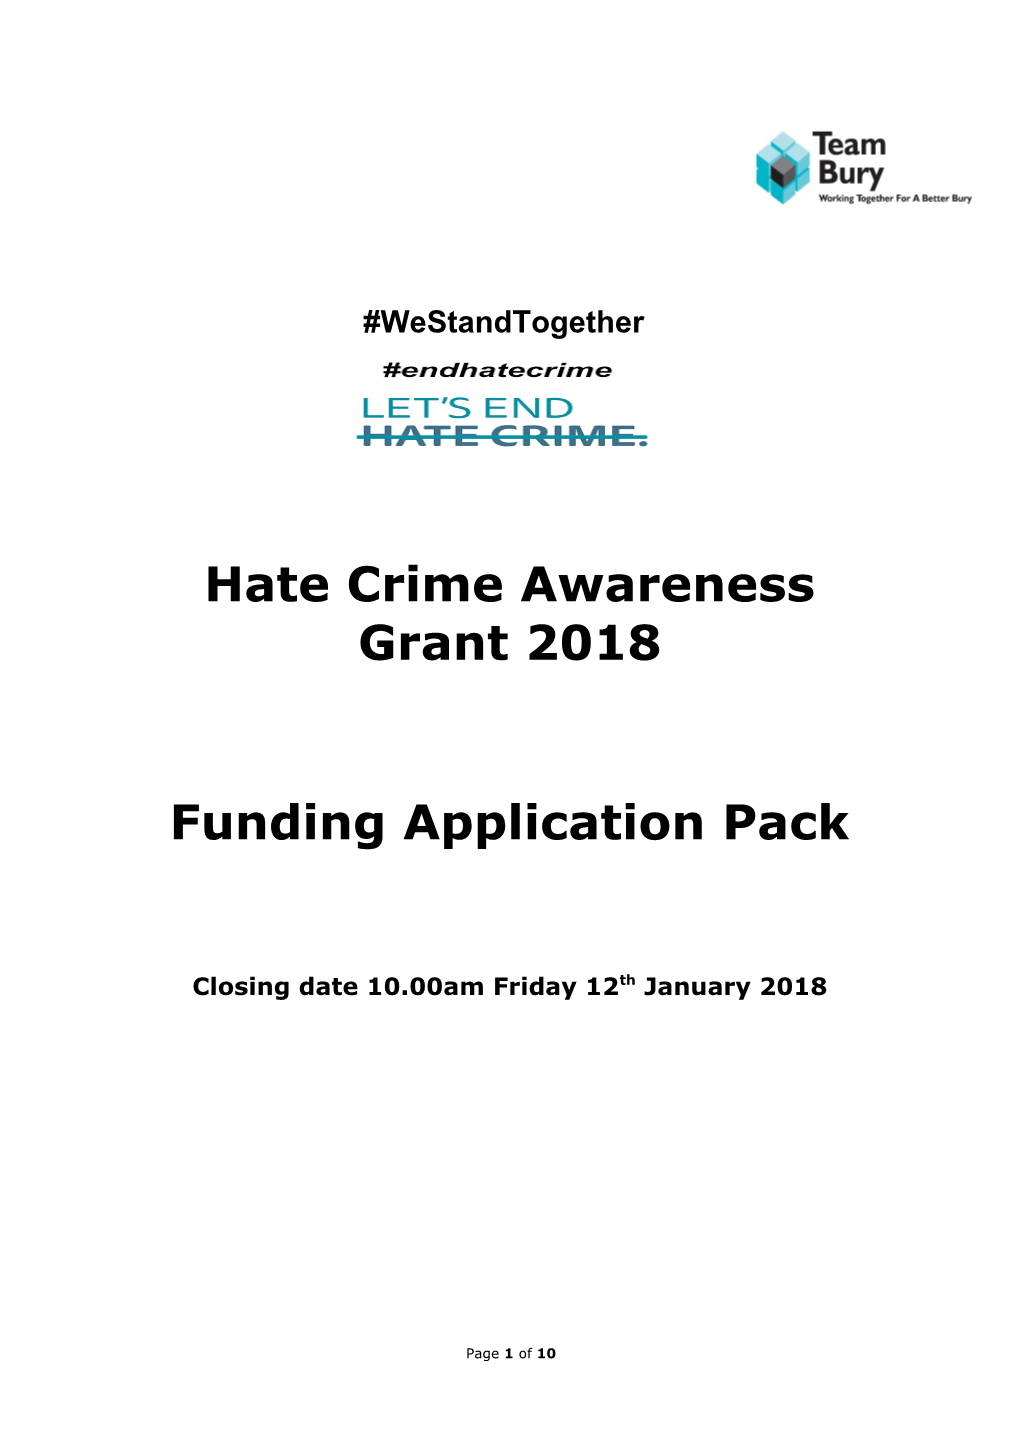 Hate Crime Awareness Grant 2018